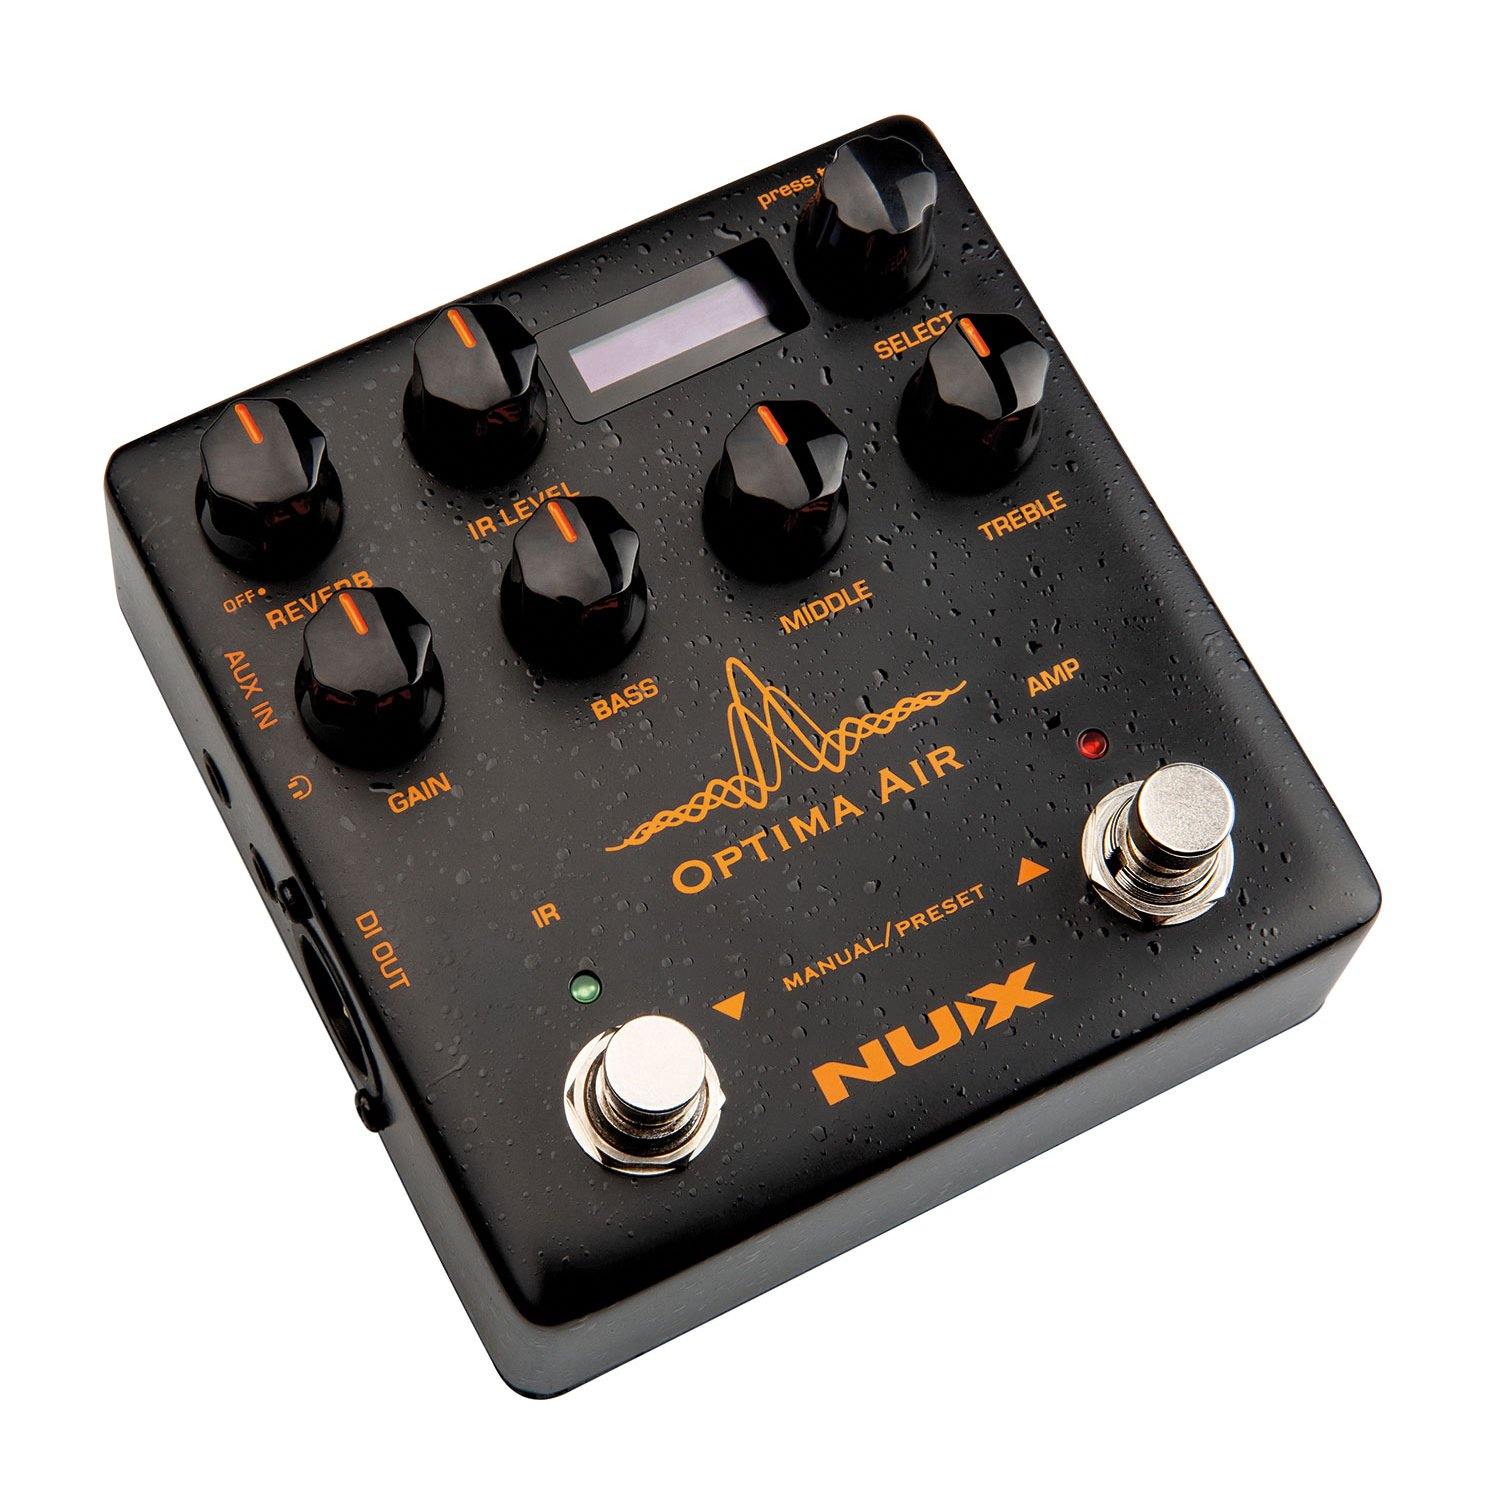 NuX Optima Air Acoustic Simulator & IR Loader Pedal - DY Pro Audio